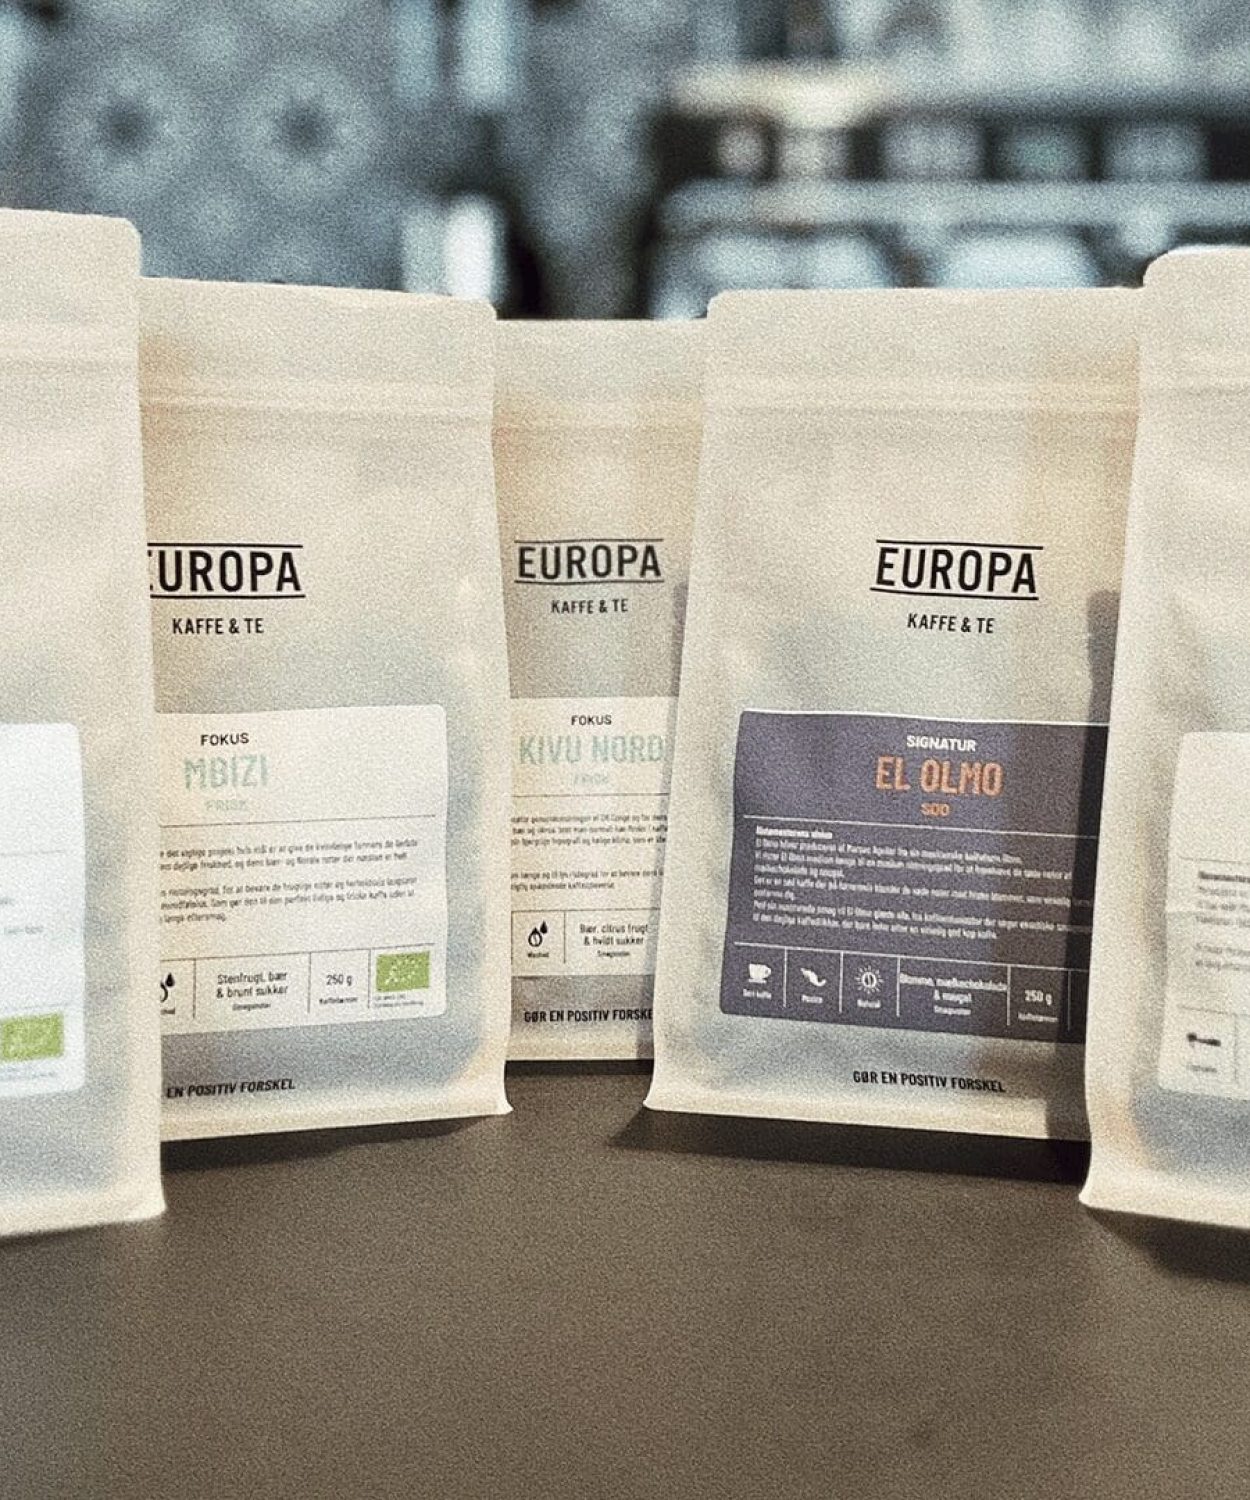 EUROPA Kaffe & Te præsenter vores nye monomateriale emballage